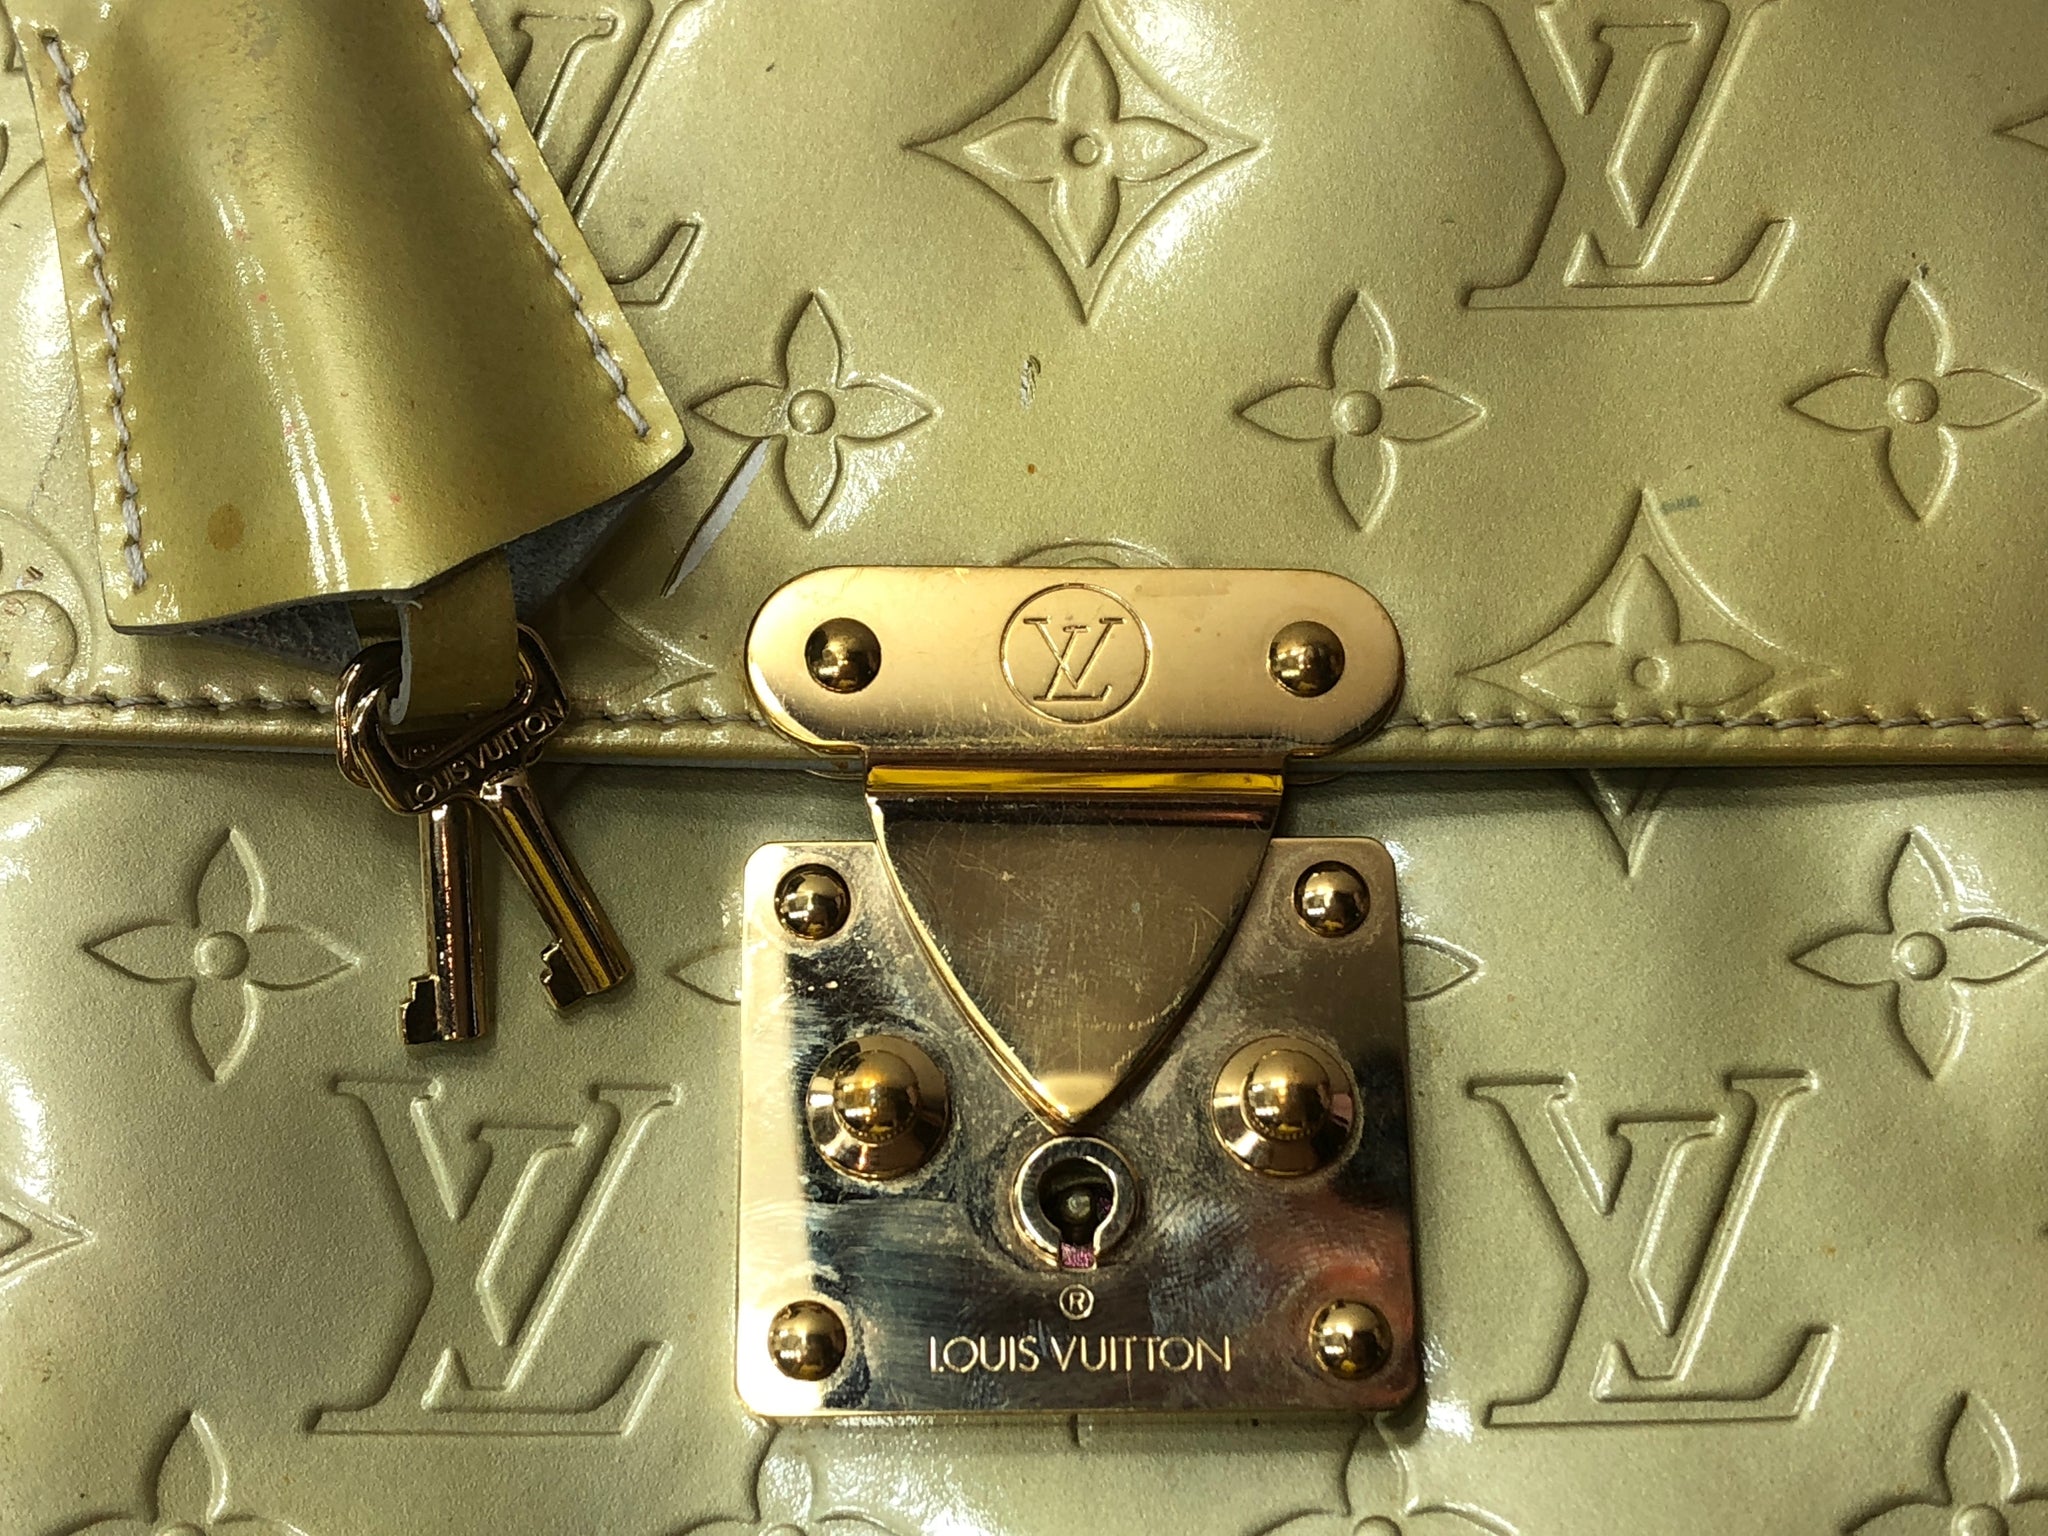 3ae5361] Auth Louis Vuitton Handbag Monogram Vernis Spring Street M91068  Lime Yellow